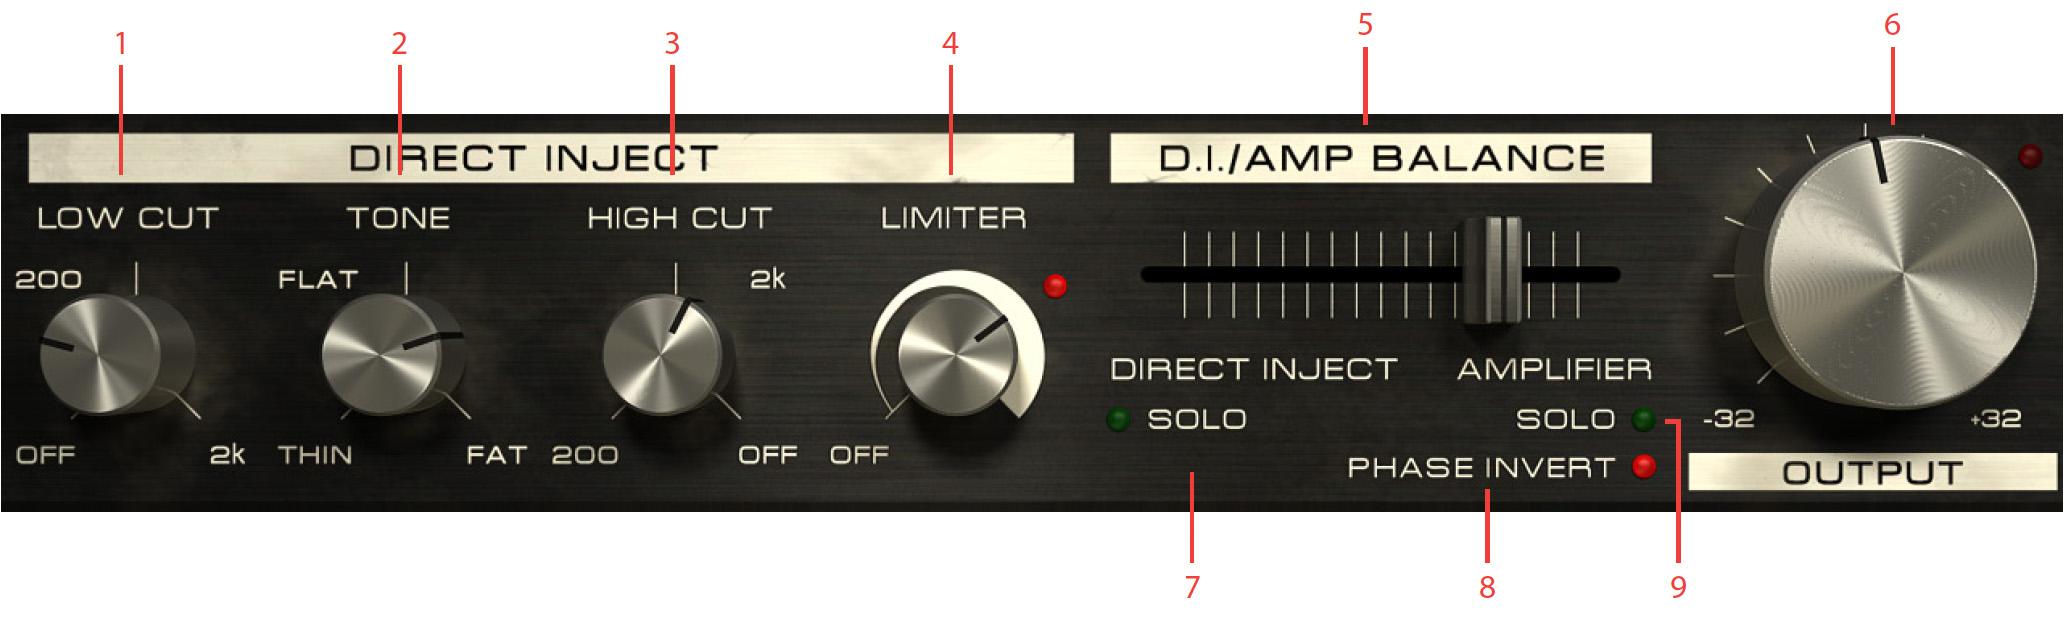 bass-amp-room-7-the-mix-panel.jpg